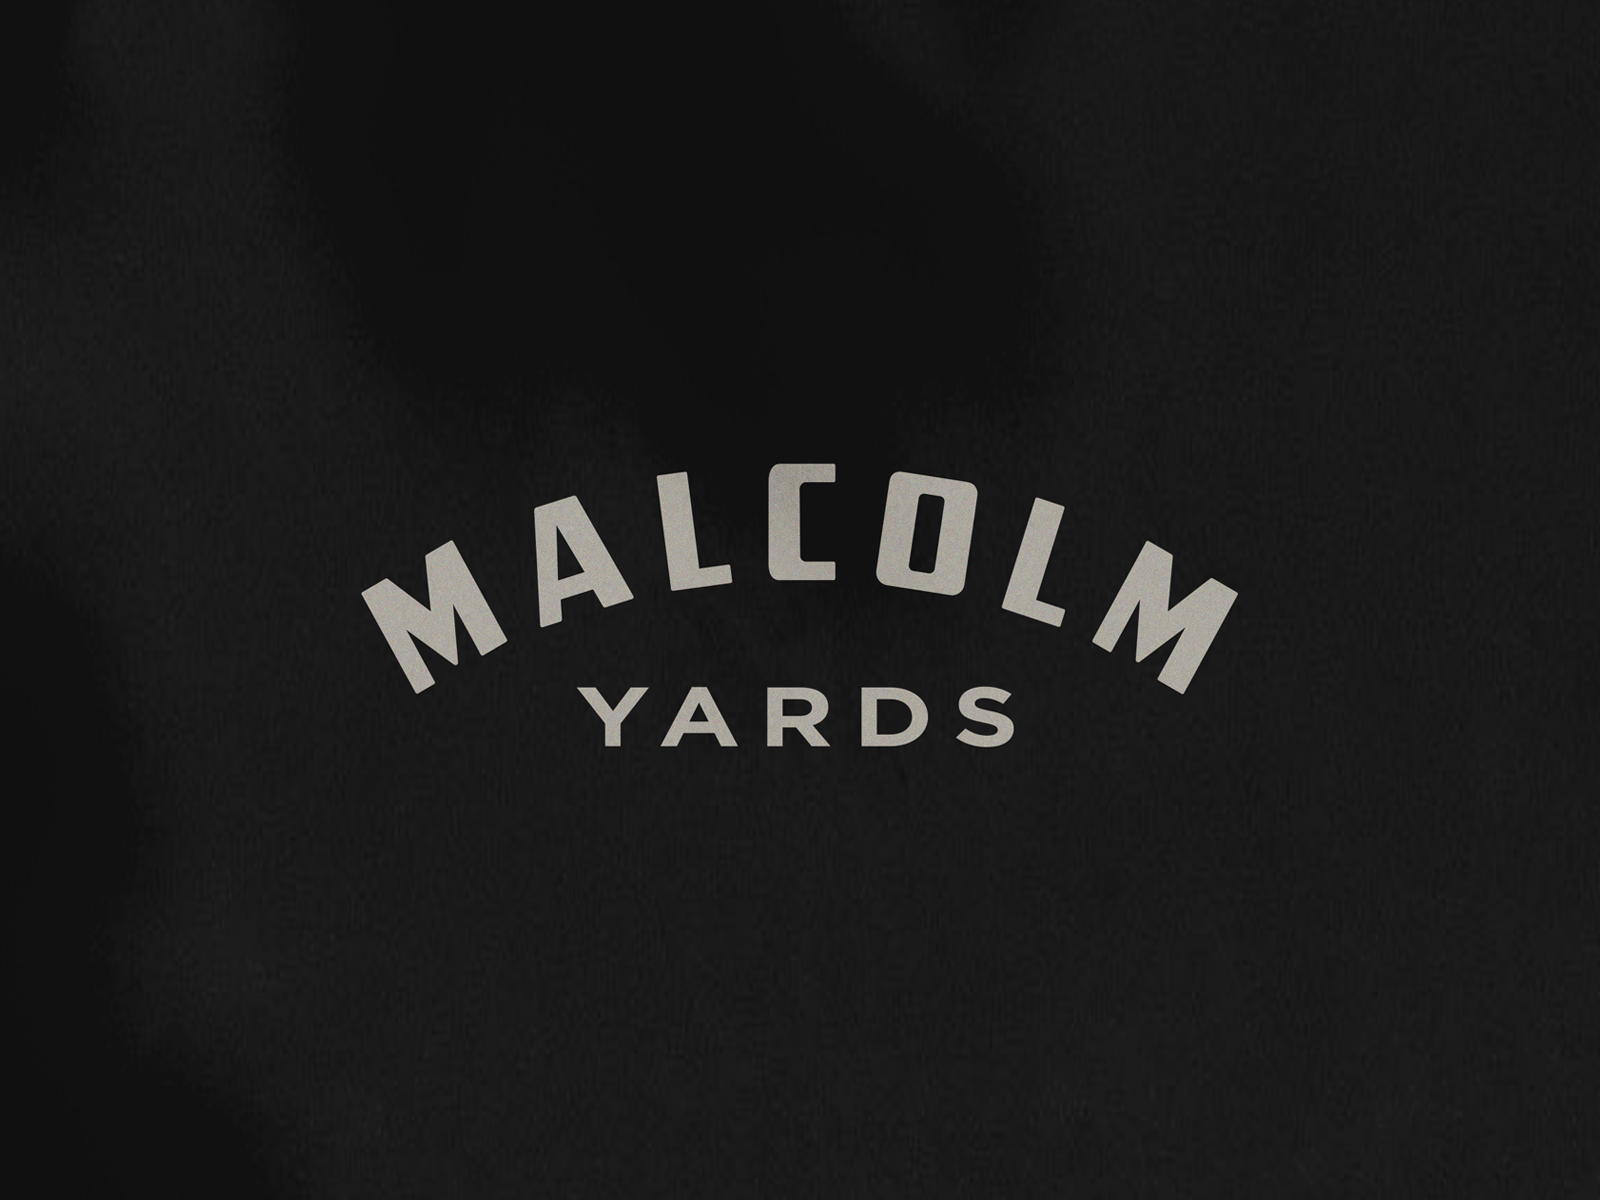 Malcolm Yards